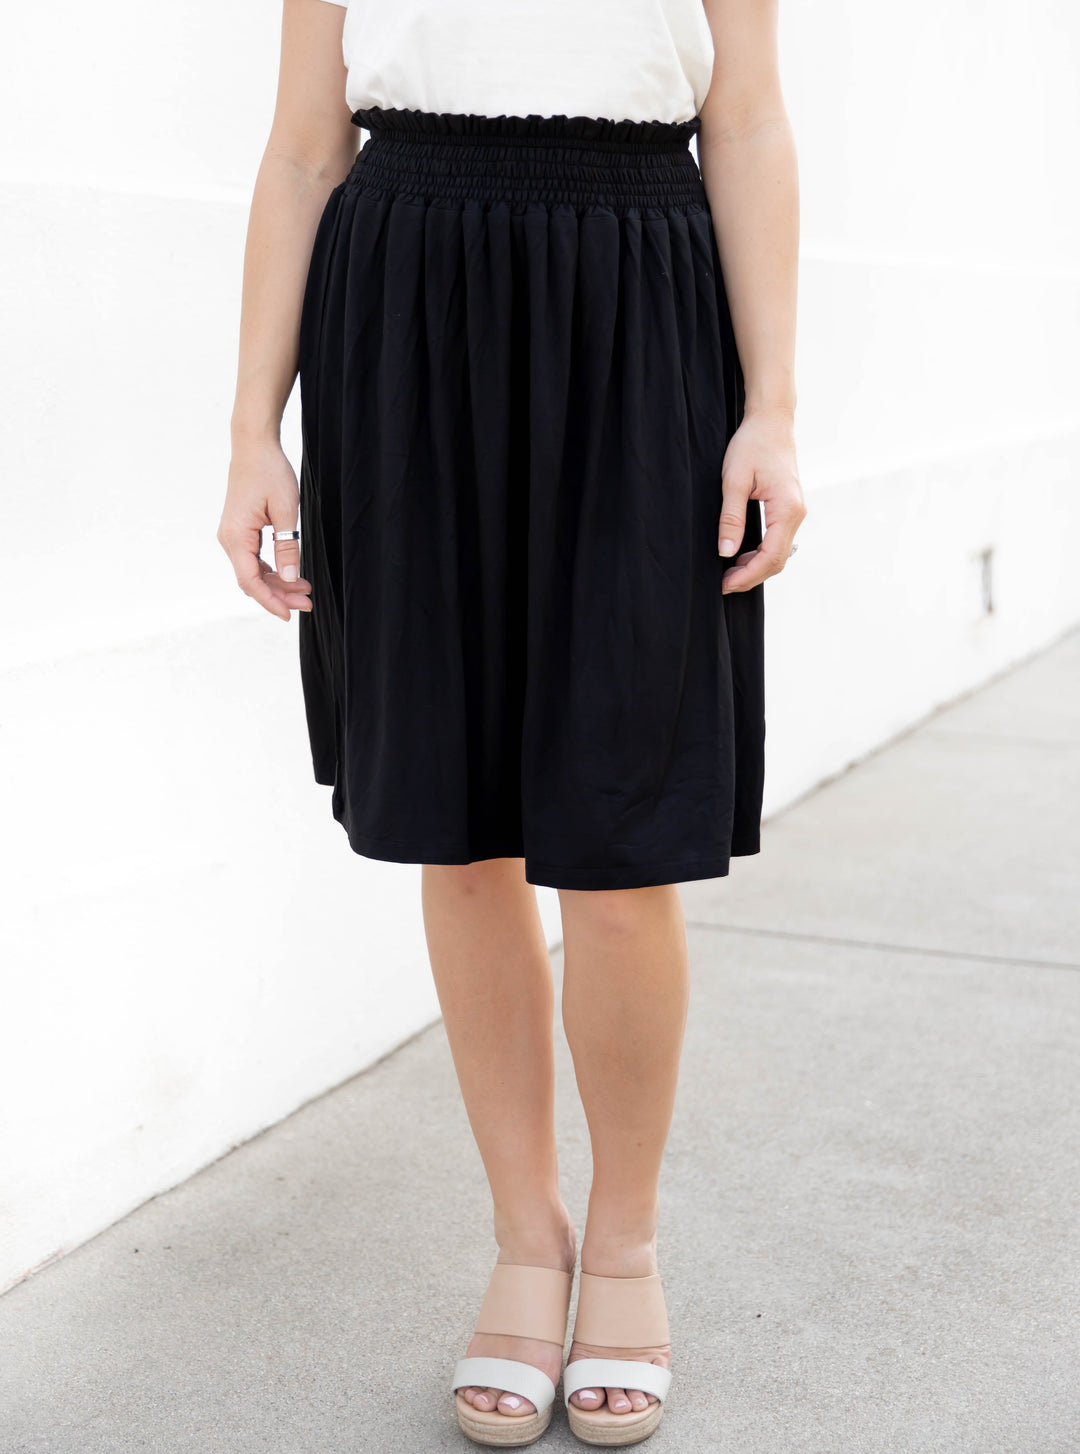 The Tracie Knee Length Skirt